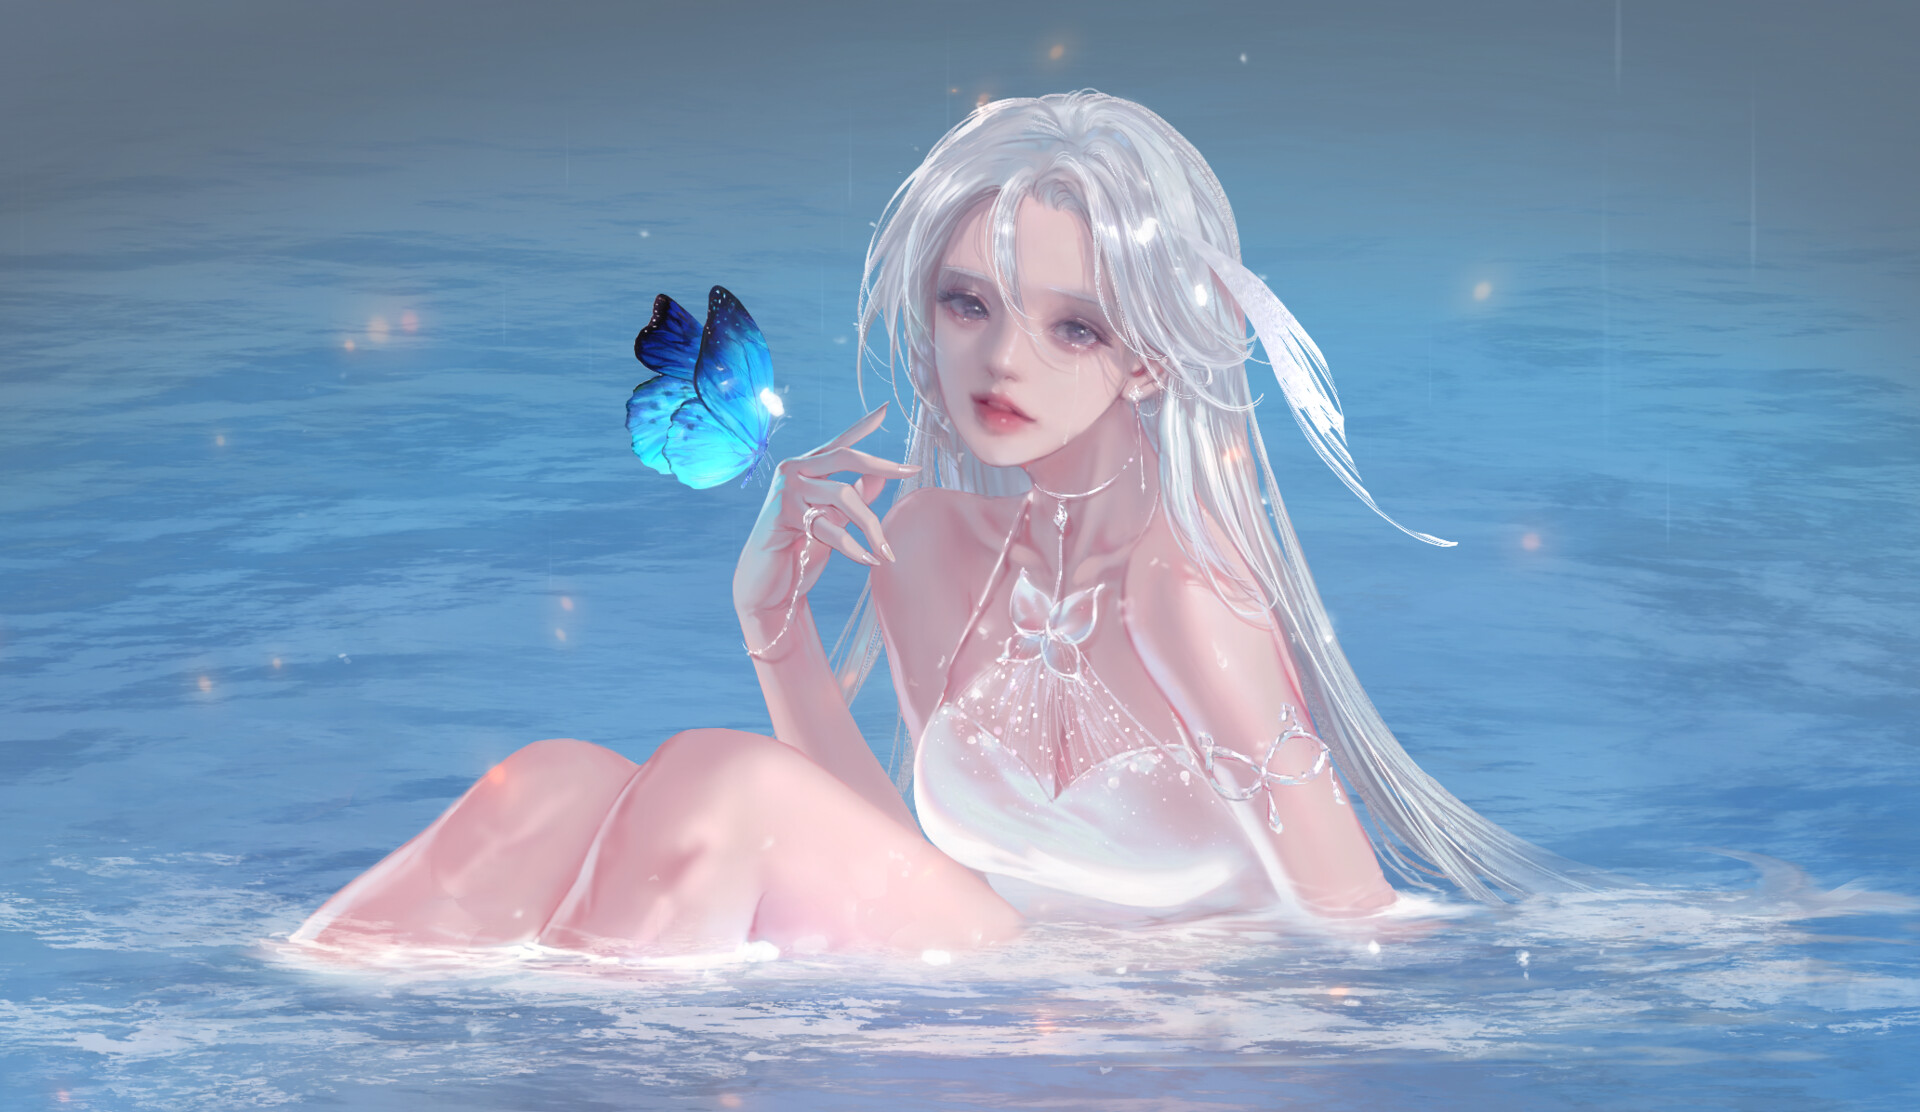 General 1920x1112 women fantasy art fantasy girl butterfly long hair in water water looking at viewer